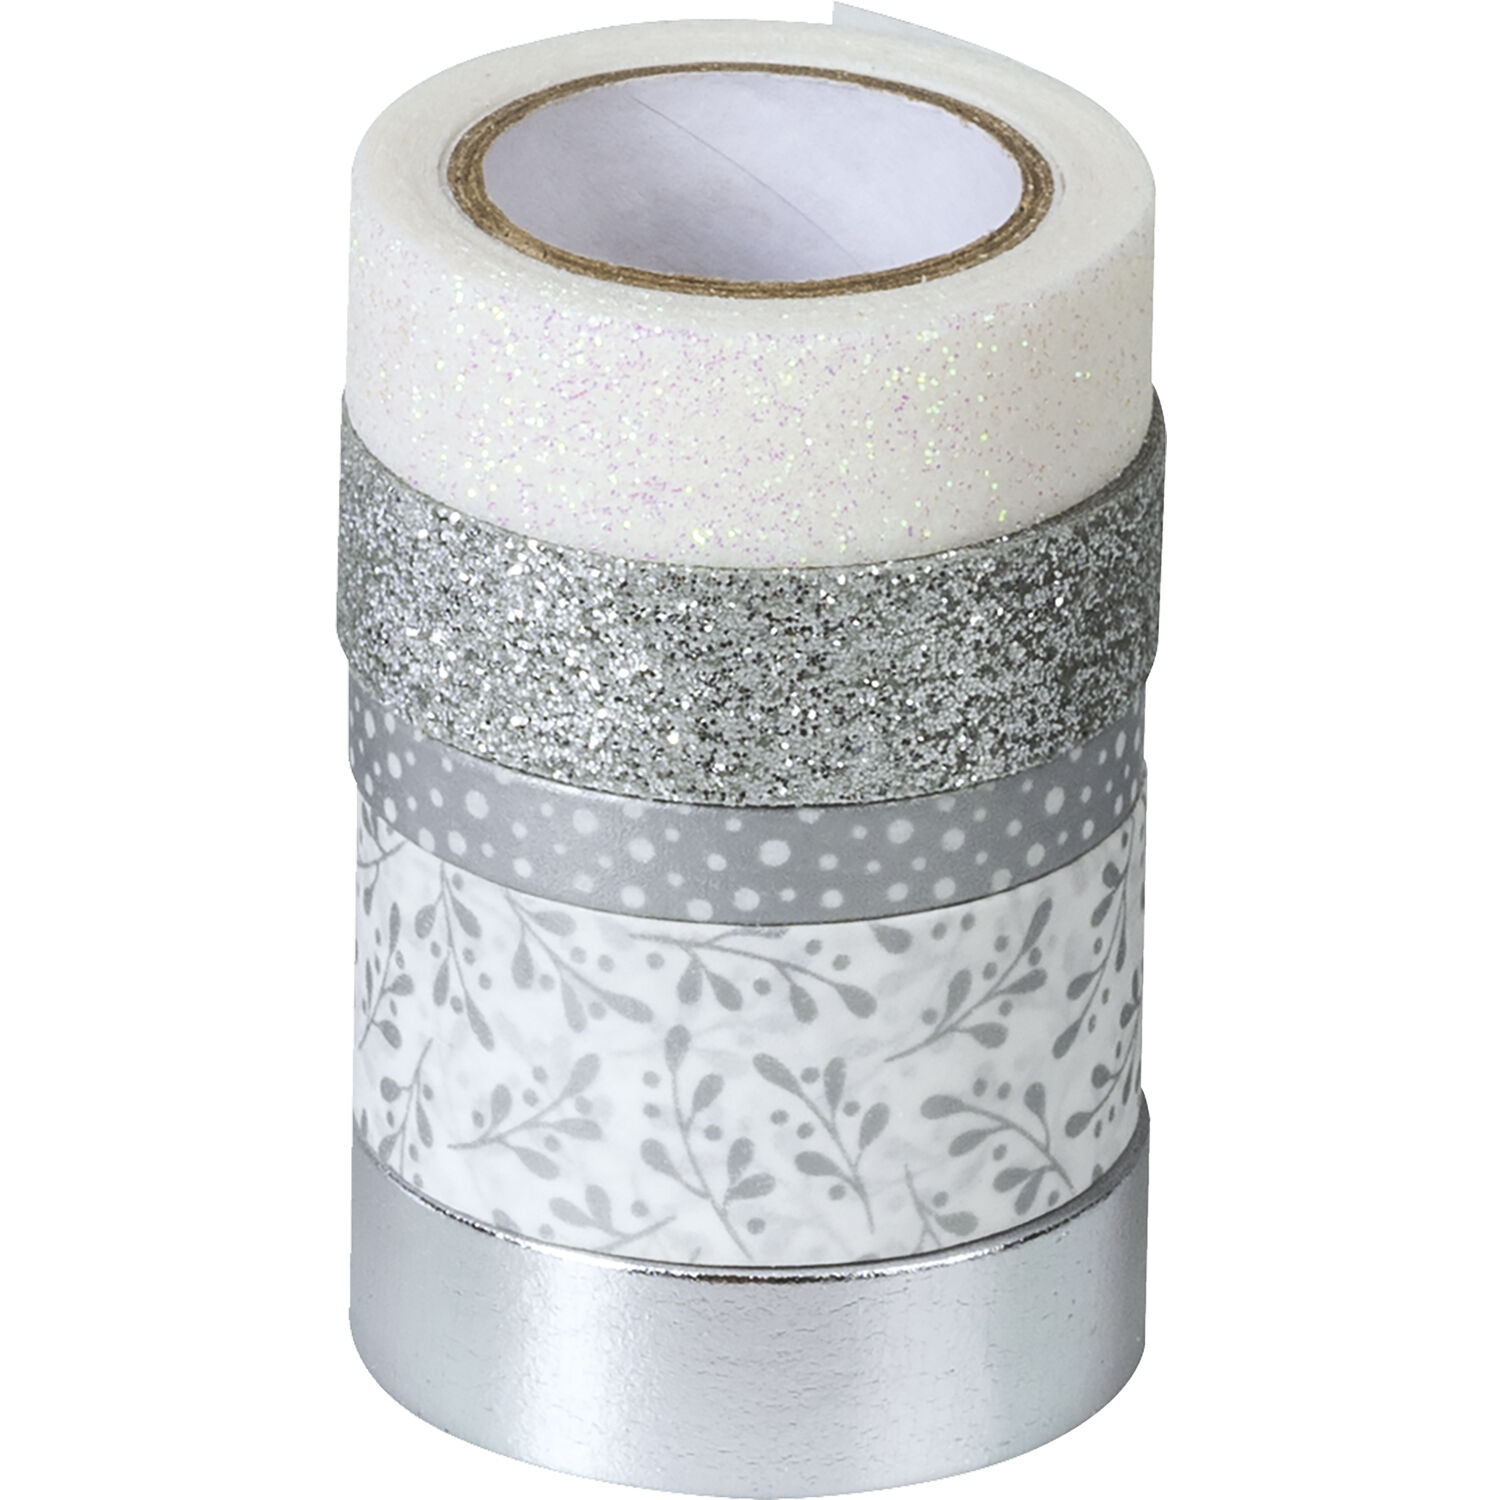 NEU Deko Tape / Klebeband, 5 Rollen, Effekt Mix Basic Silber - Washi Tape,  Fabric- & Glitter-Tape Klebeband, Sticker & Co. Papiere & Co. Produkte 